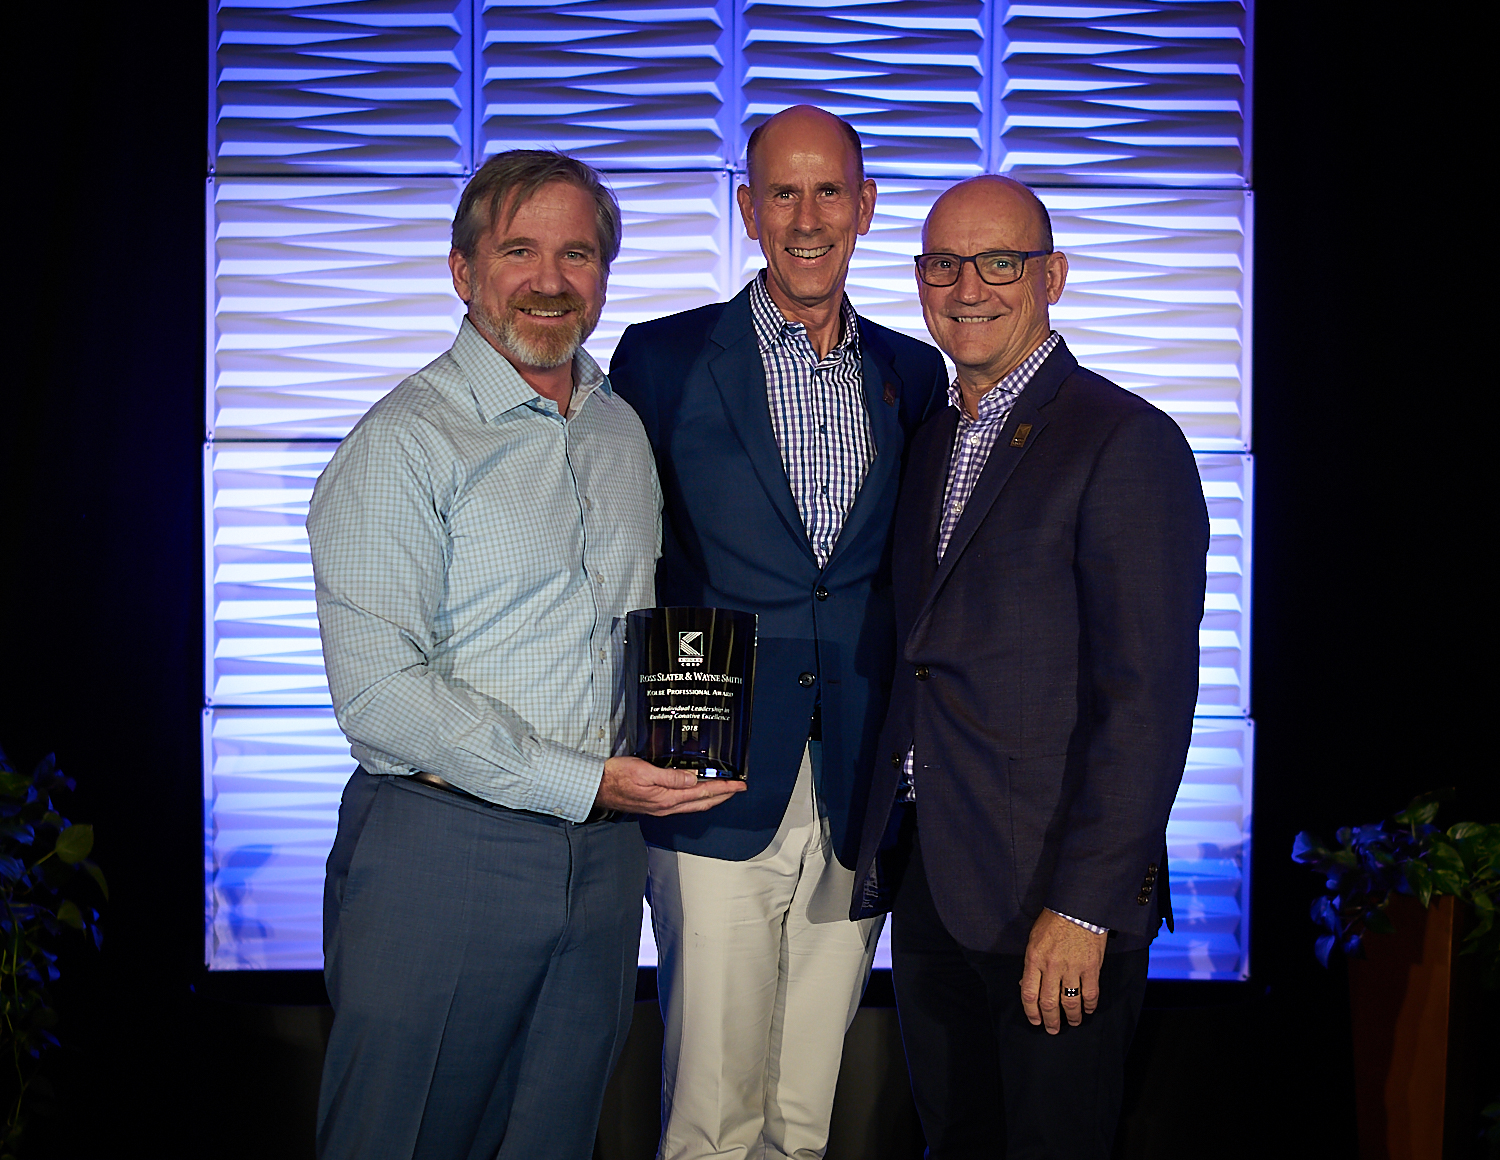 Kolbe Corp CEO David Kolbe (left) awards Wayne Smith (right) and Ross Slater (middle) with the 2018 Kolbe Professional Award.